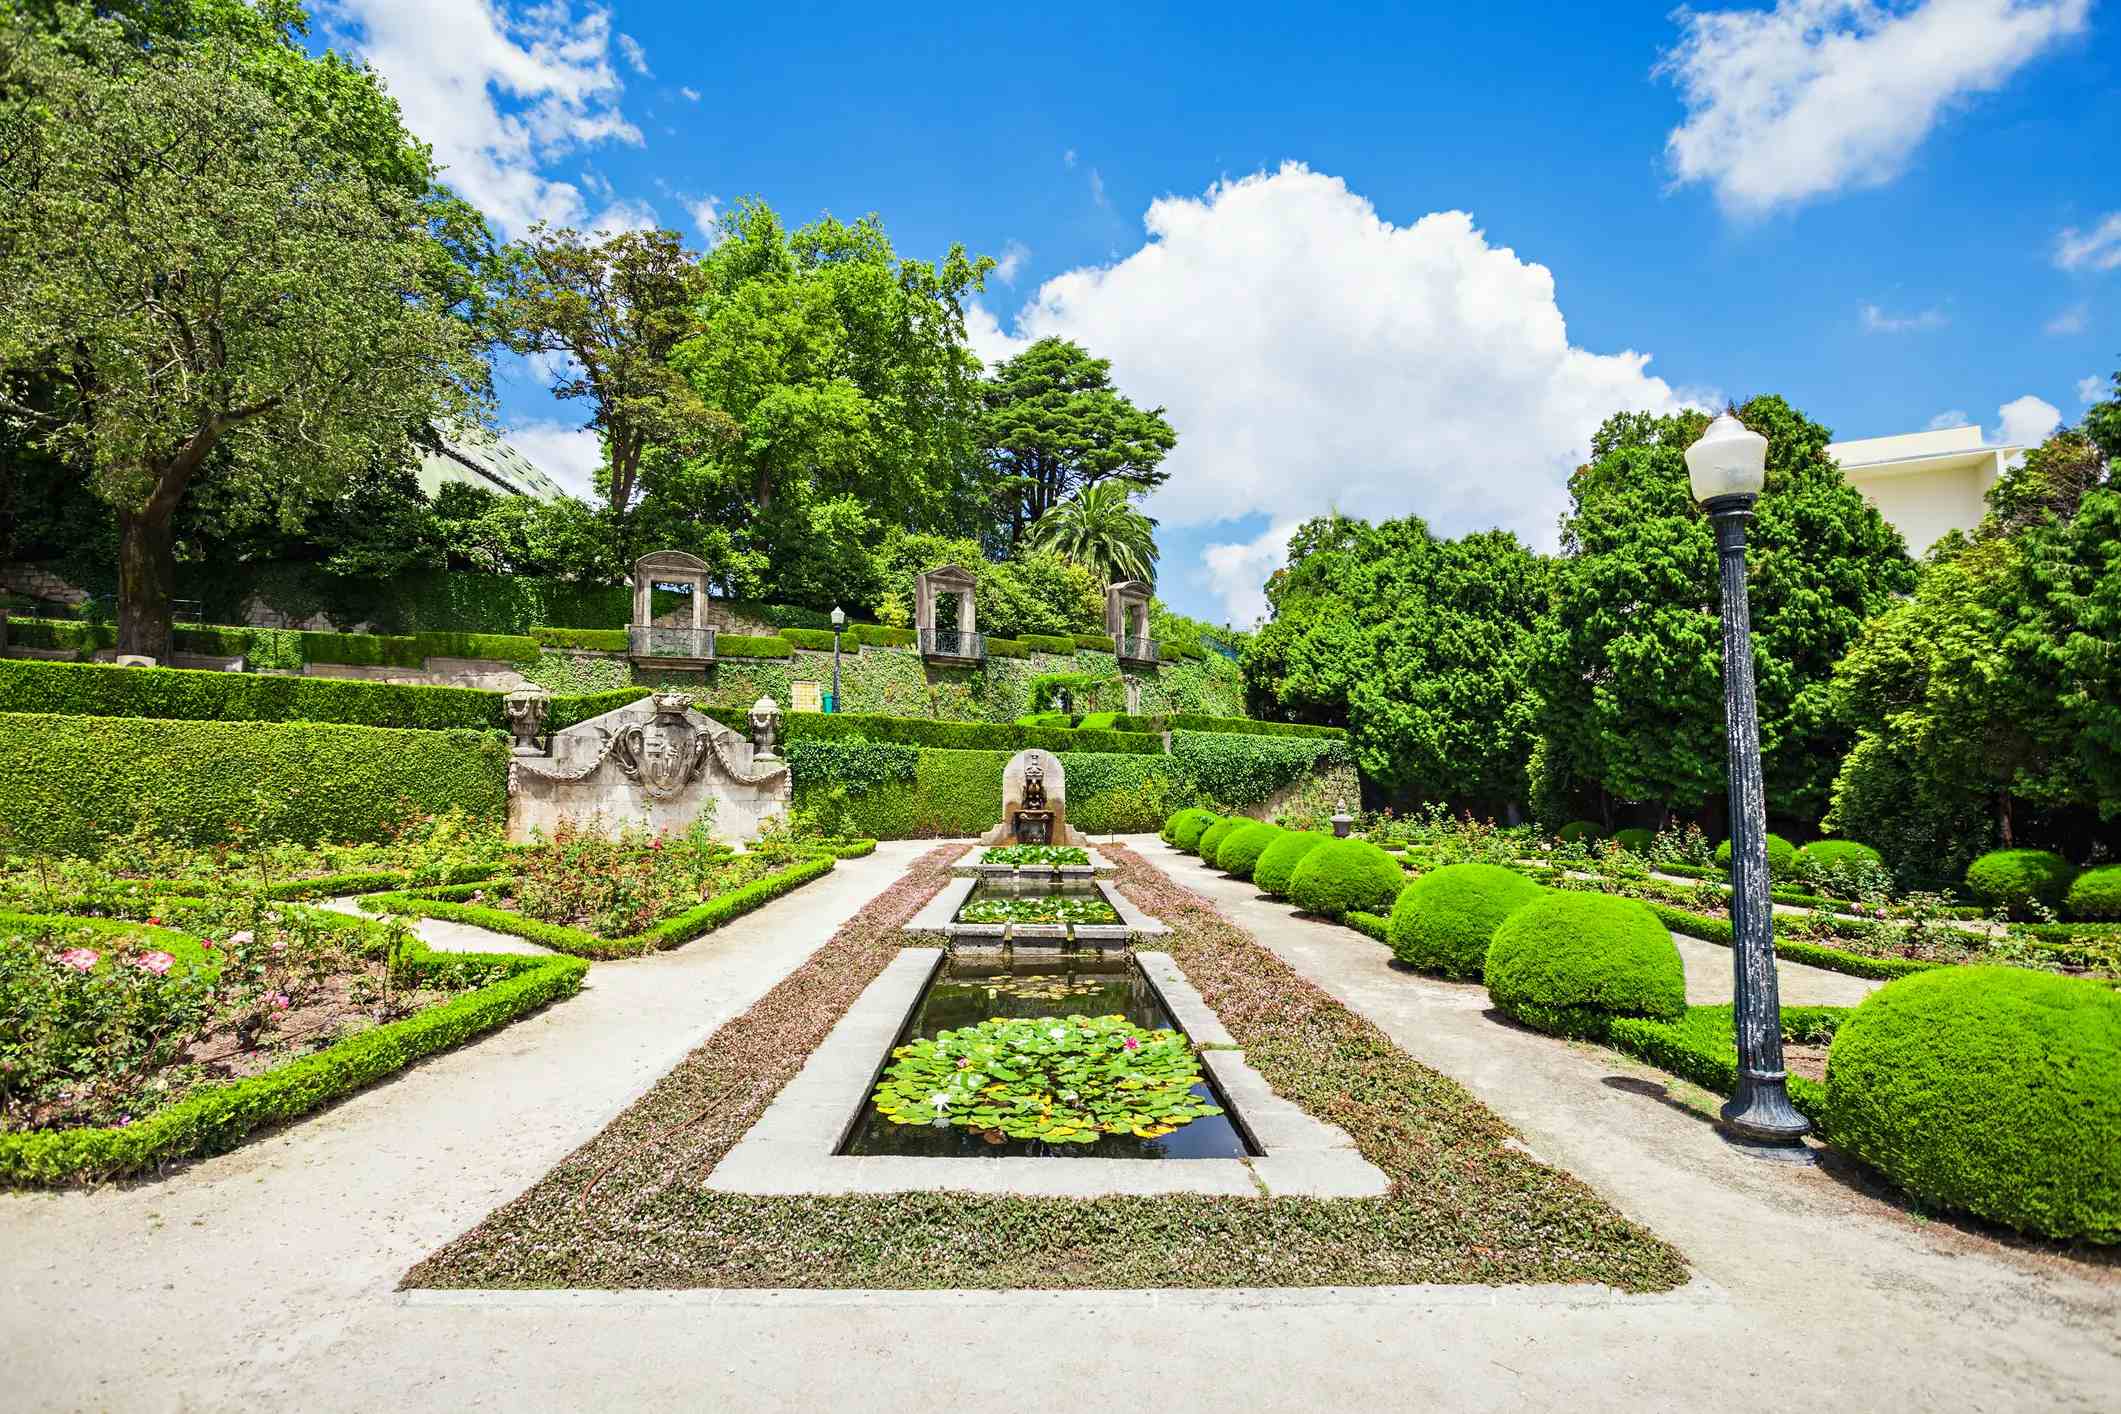 Jardins do Palácio de Cristal image